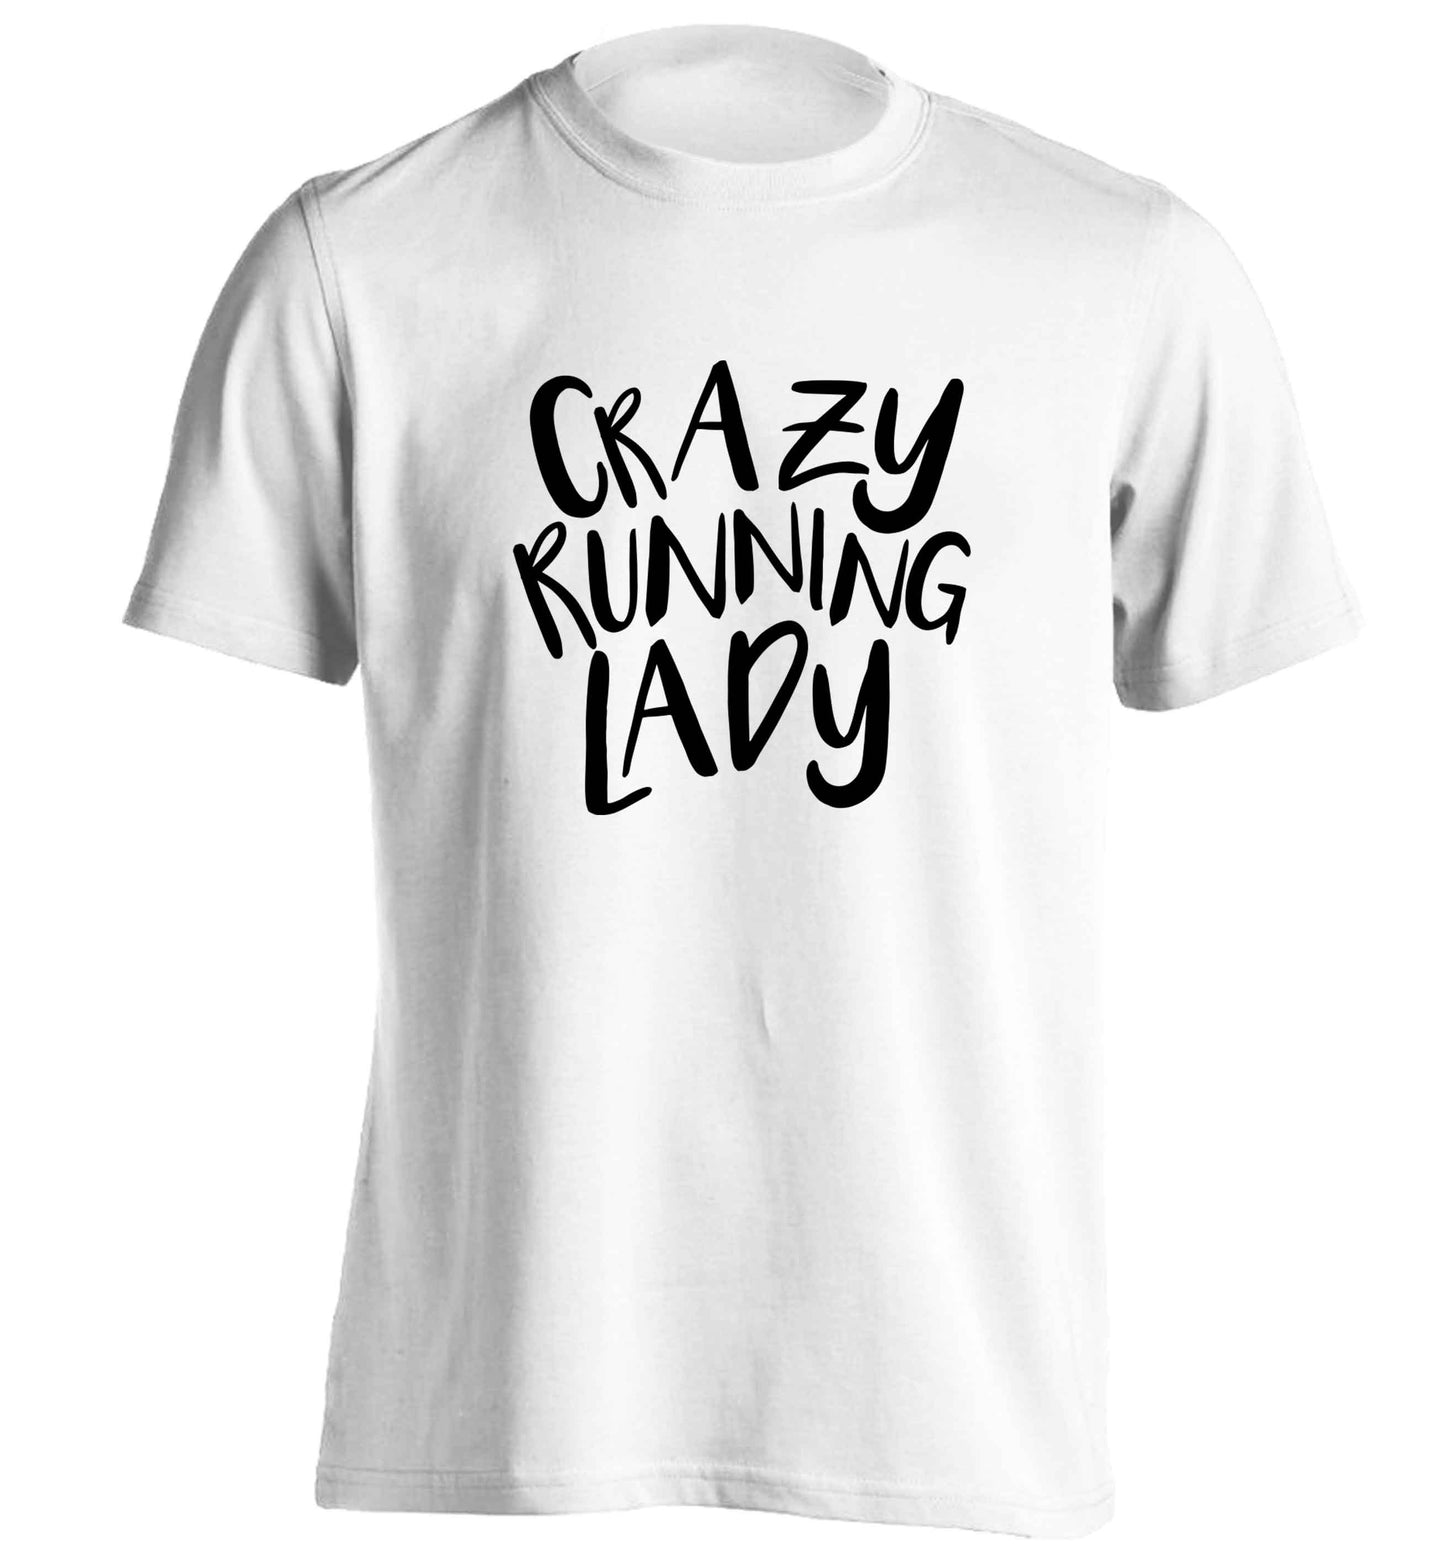 Crazy running lady adults unisex white Tshirt 2XL